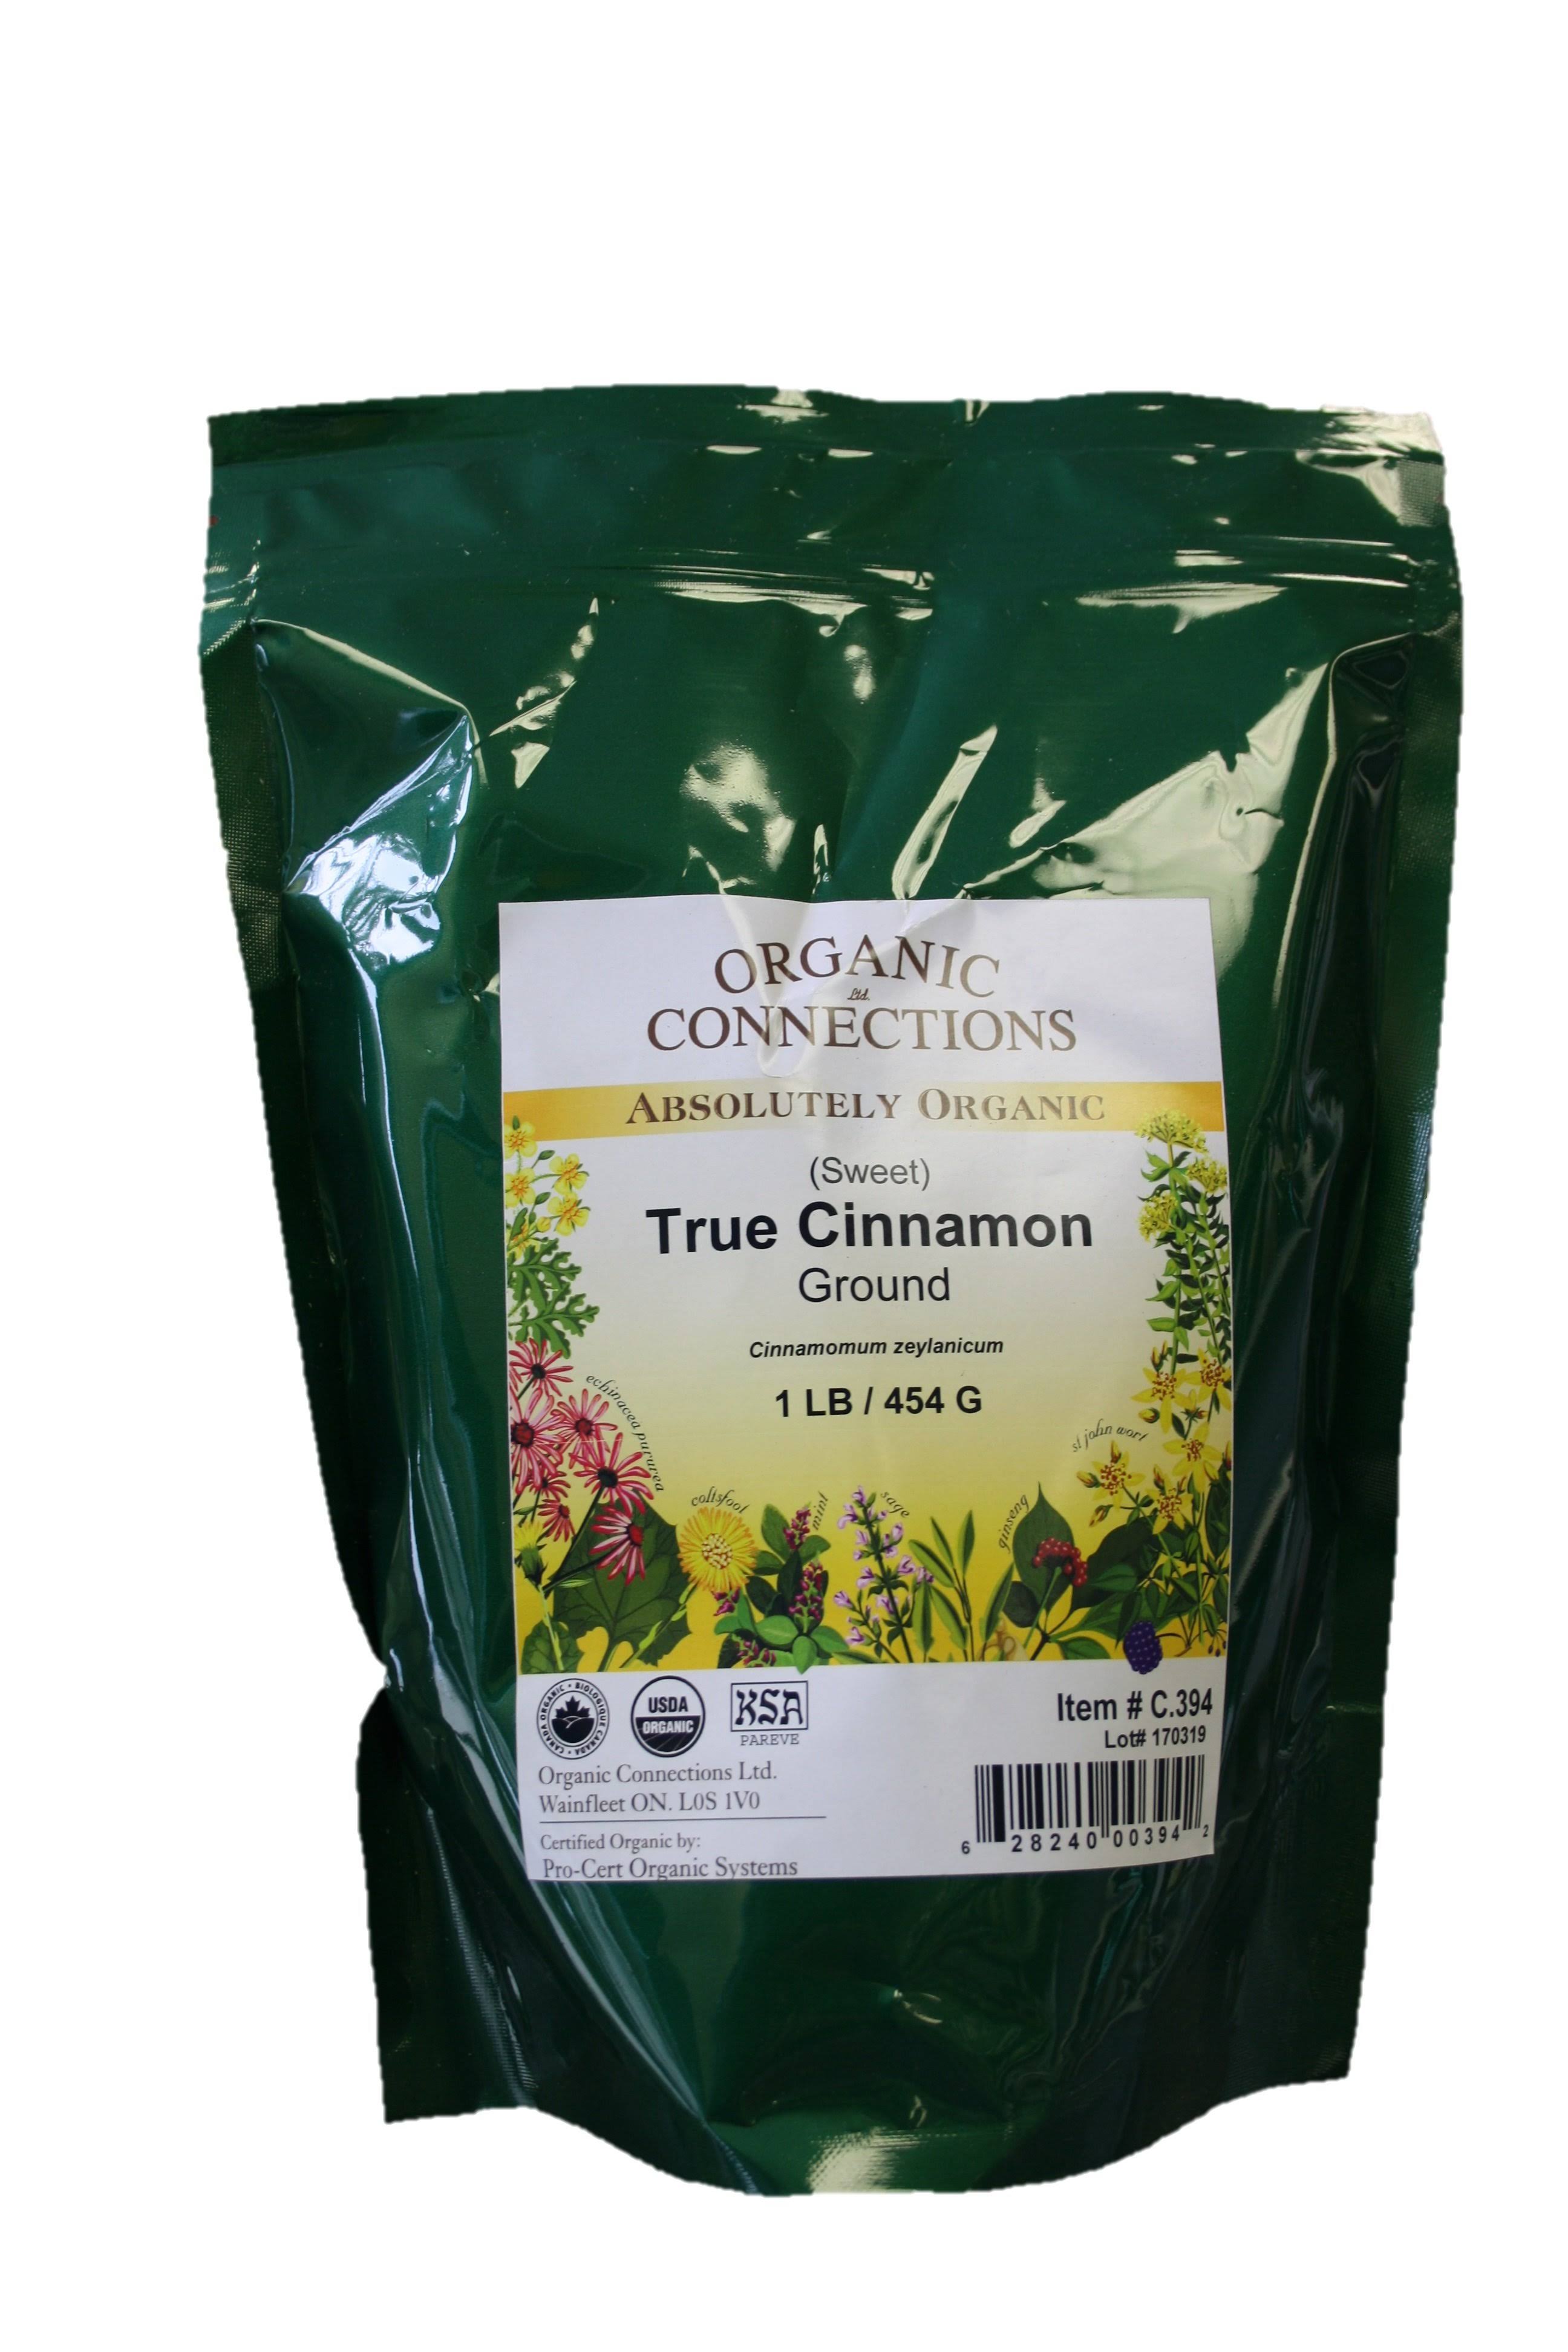 Organic Connections, Cinnamon, Sweet, Ceylon, Ground, Organic (1 lb)